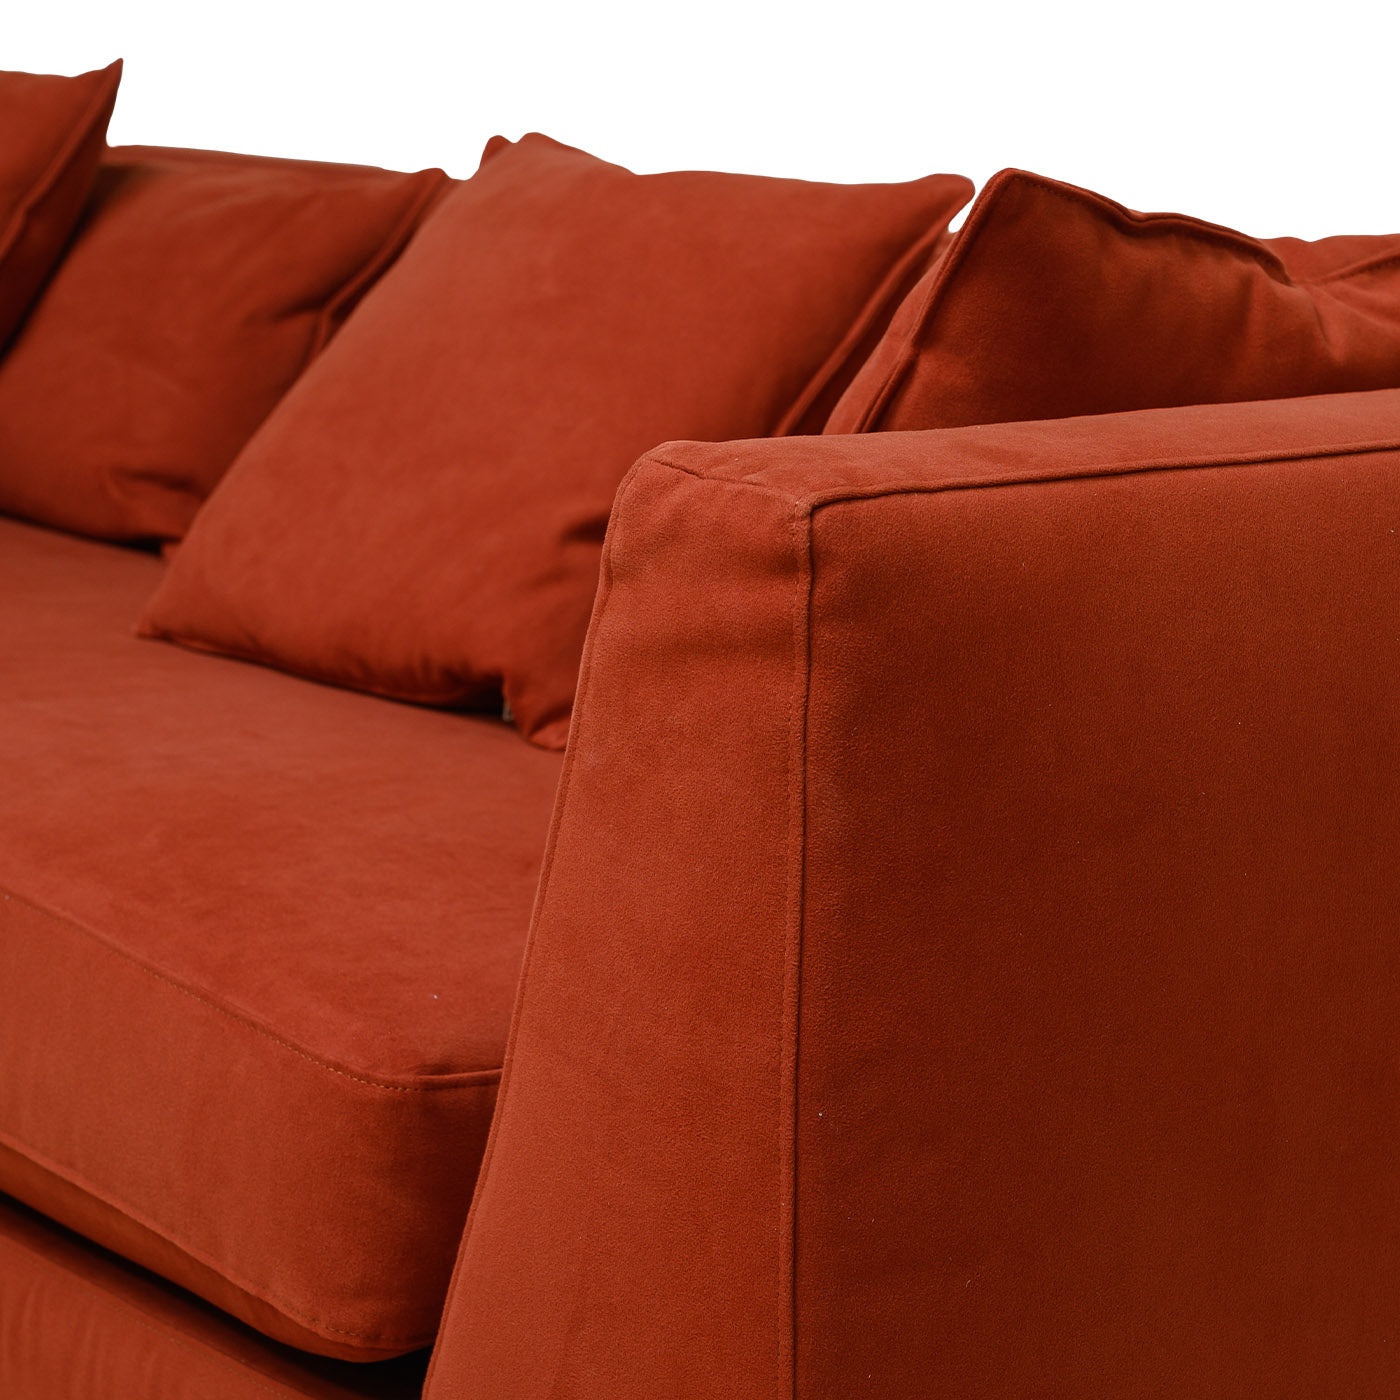 Paris 3-Seater Red Sofa - Alternative view 1